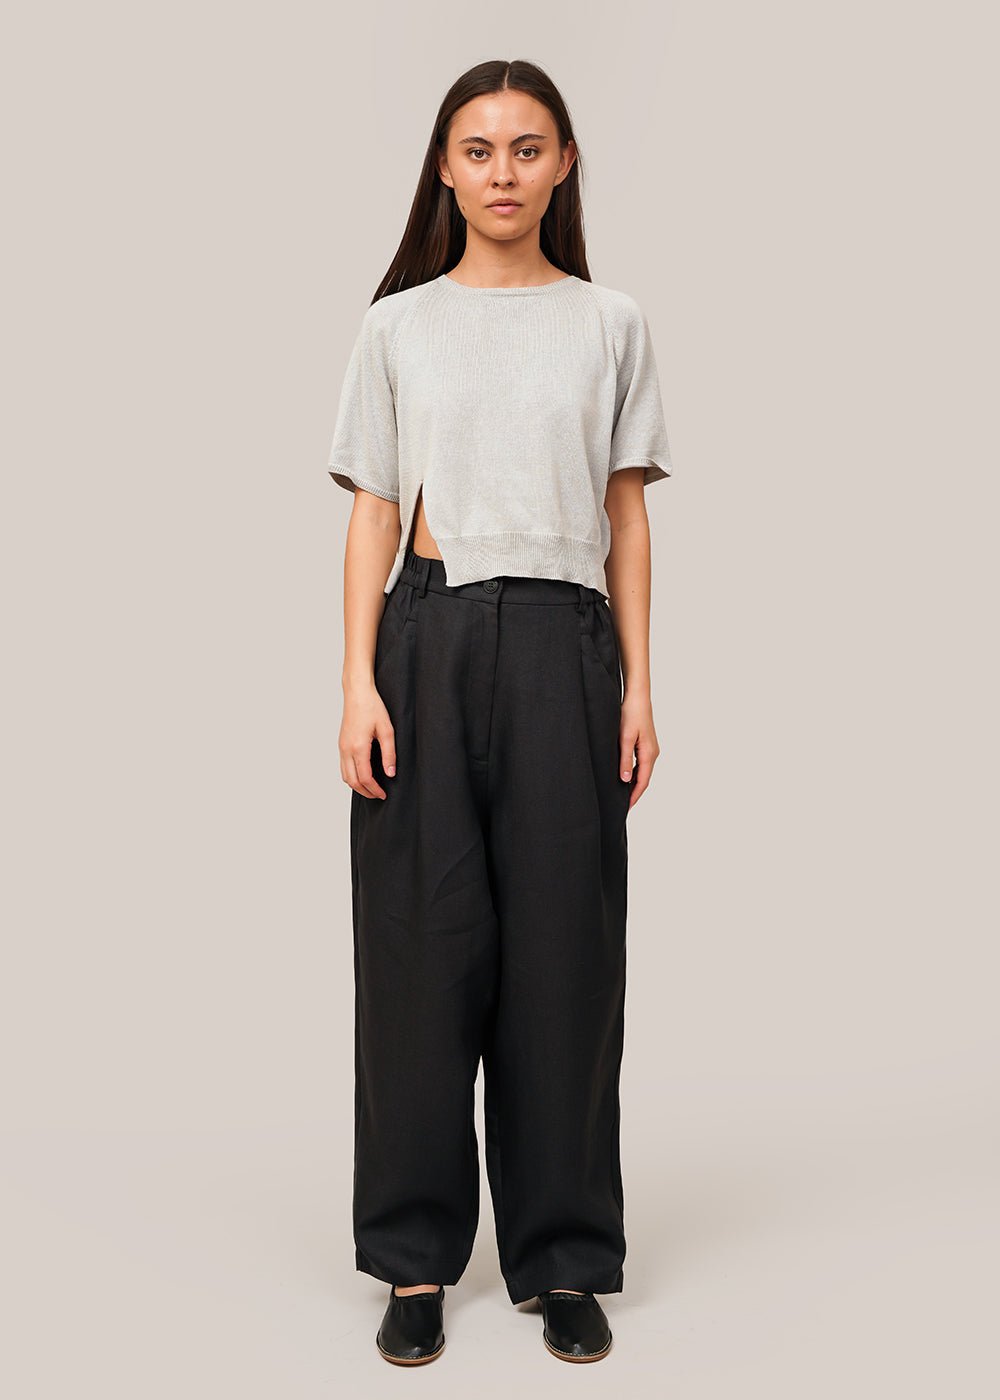 New Age Linen Pants in Black by CORDERA – New Classics Studios